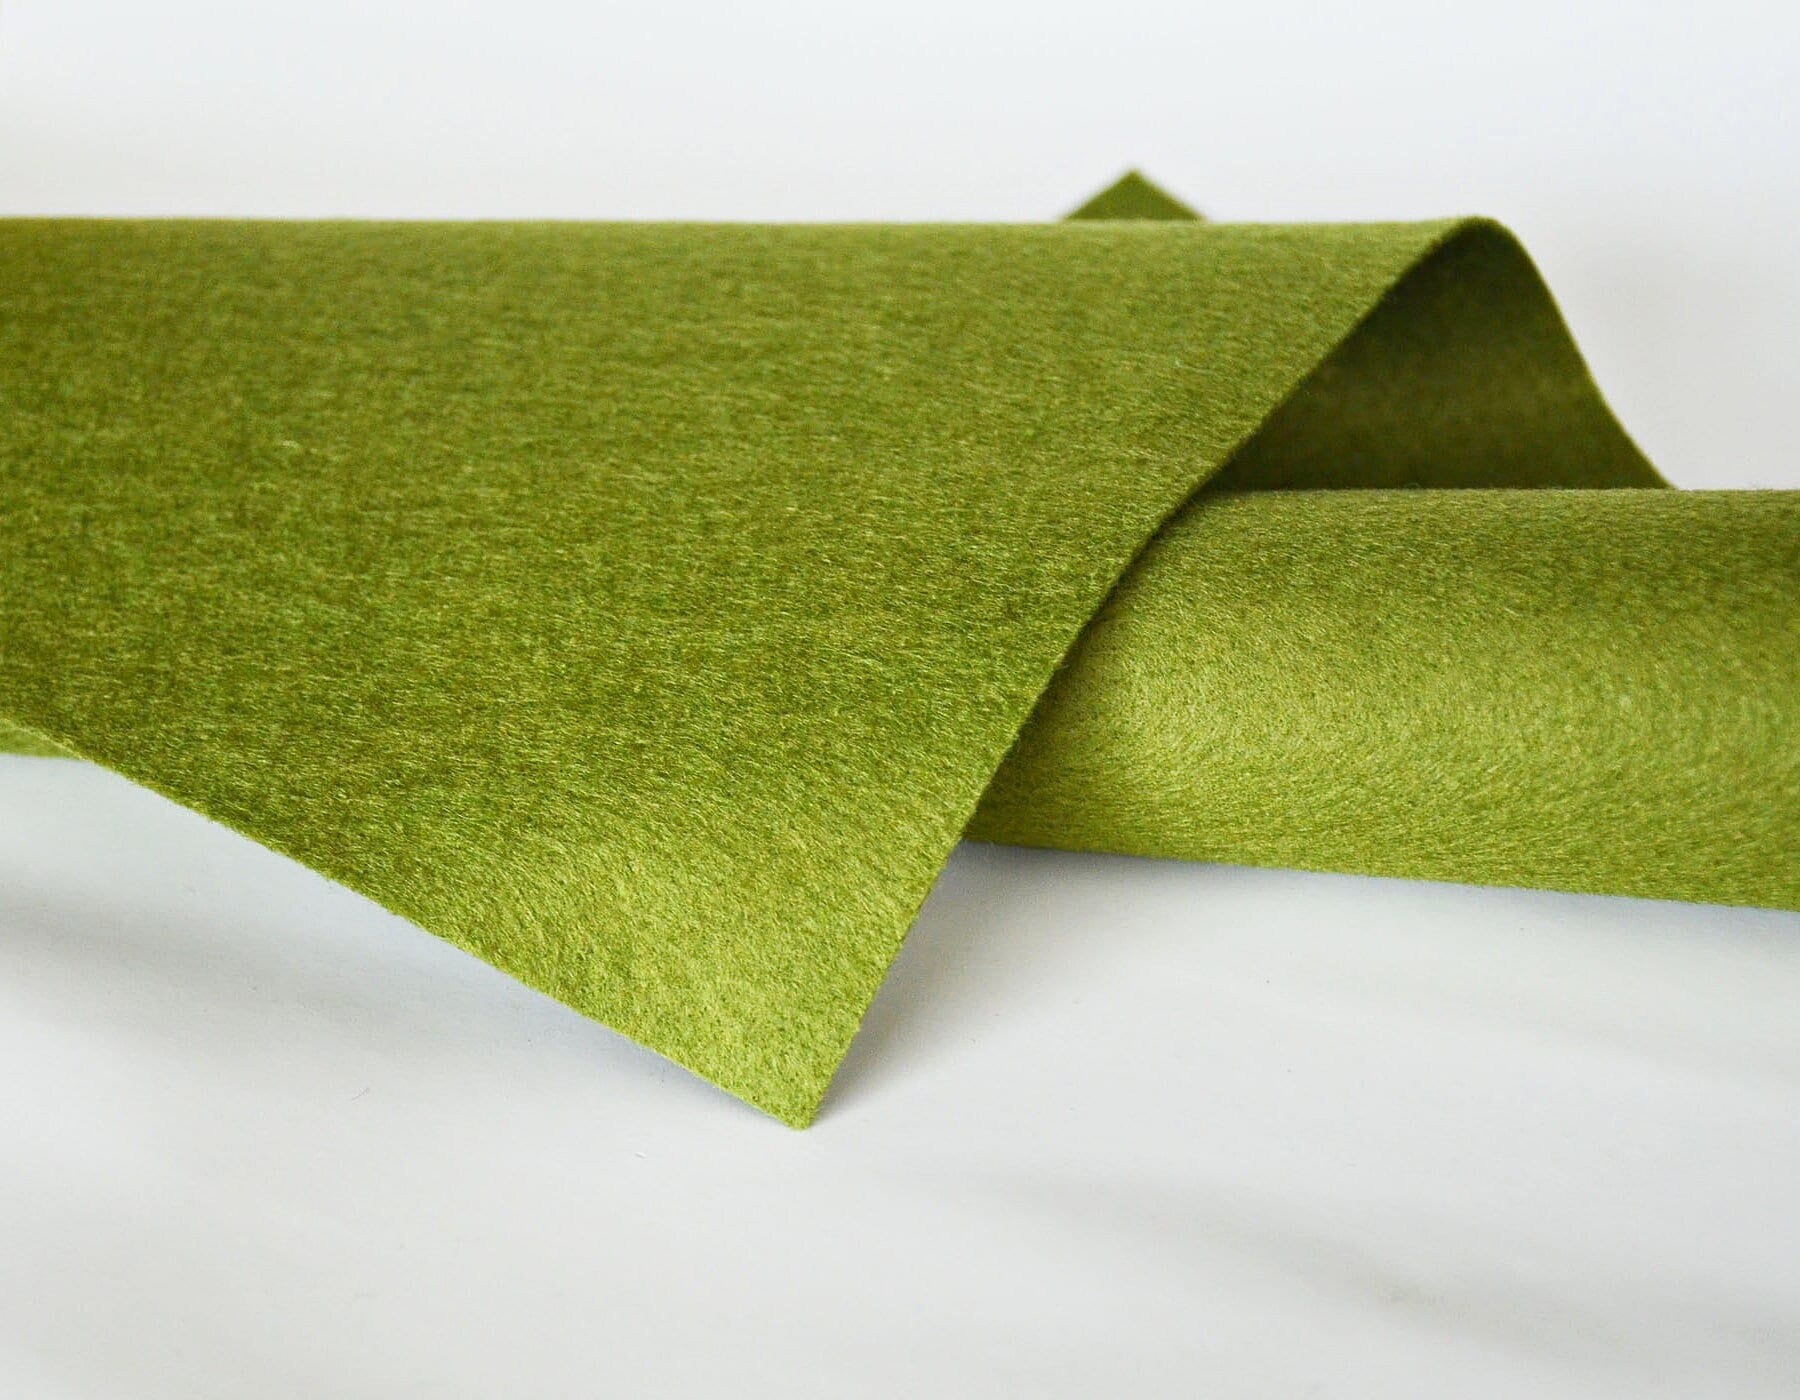 Reets Relish Green Felt Sheet - Wool Felt Fabric - Premium Green Fabric - 20% Wool Felt Blend - DIY, Sewing, Crafting, Felting - National Nonwovens